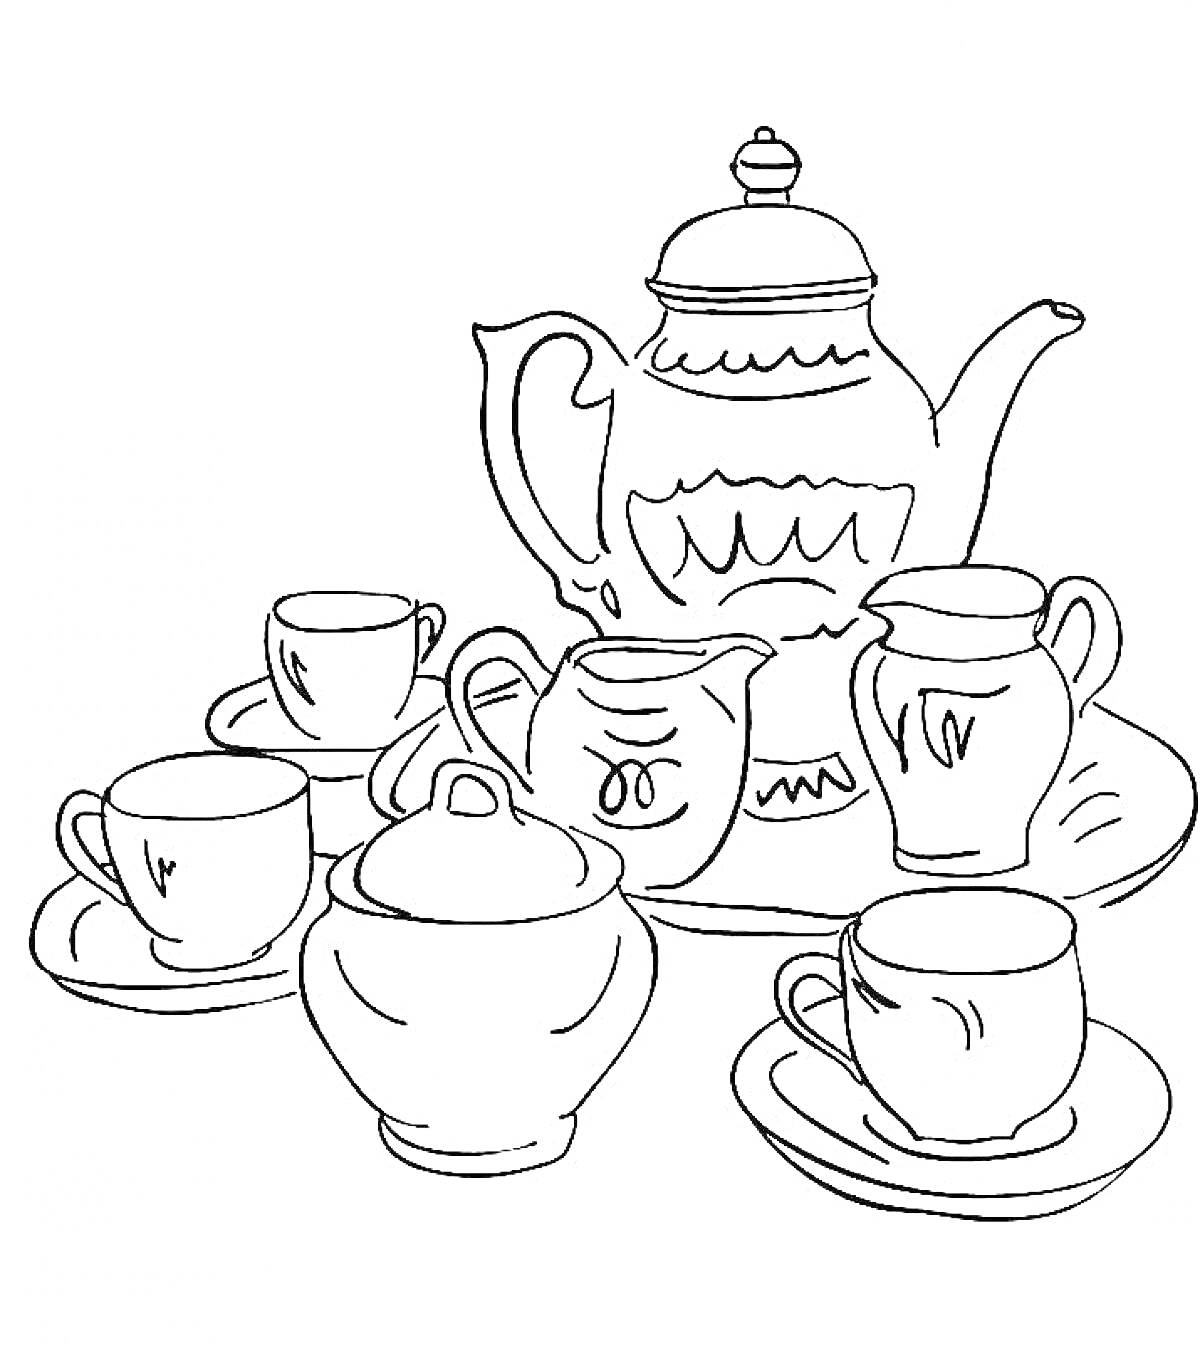 Набор посуды: чайник, четыре чашки с блюдцами, сахарница, два молочника